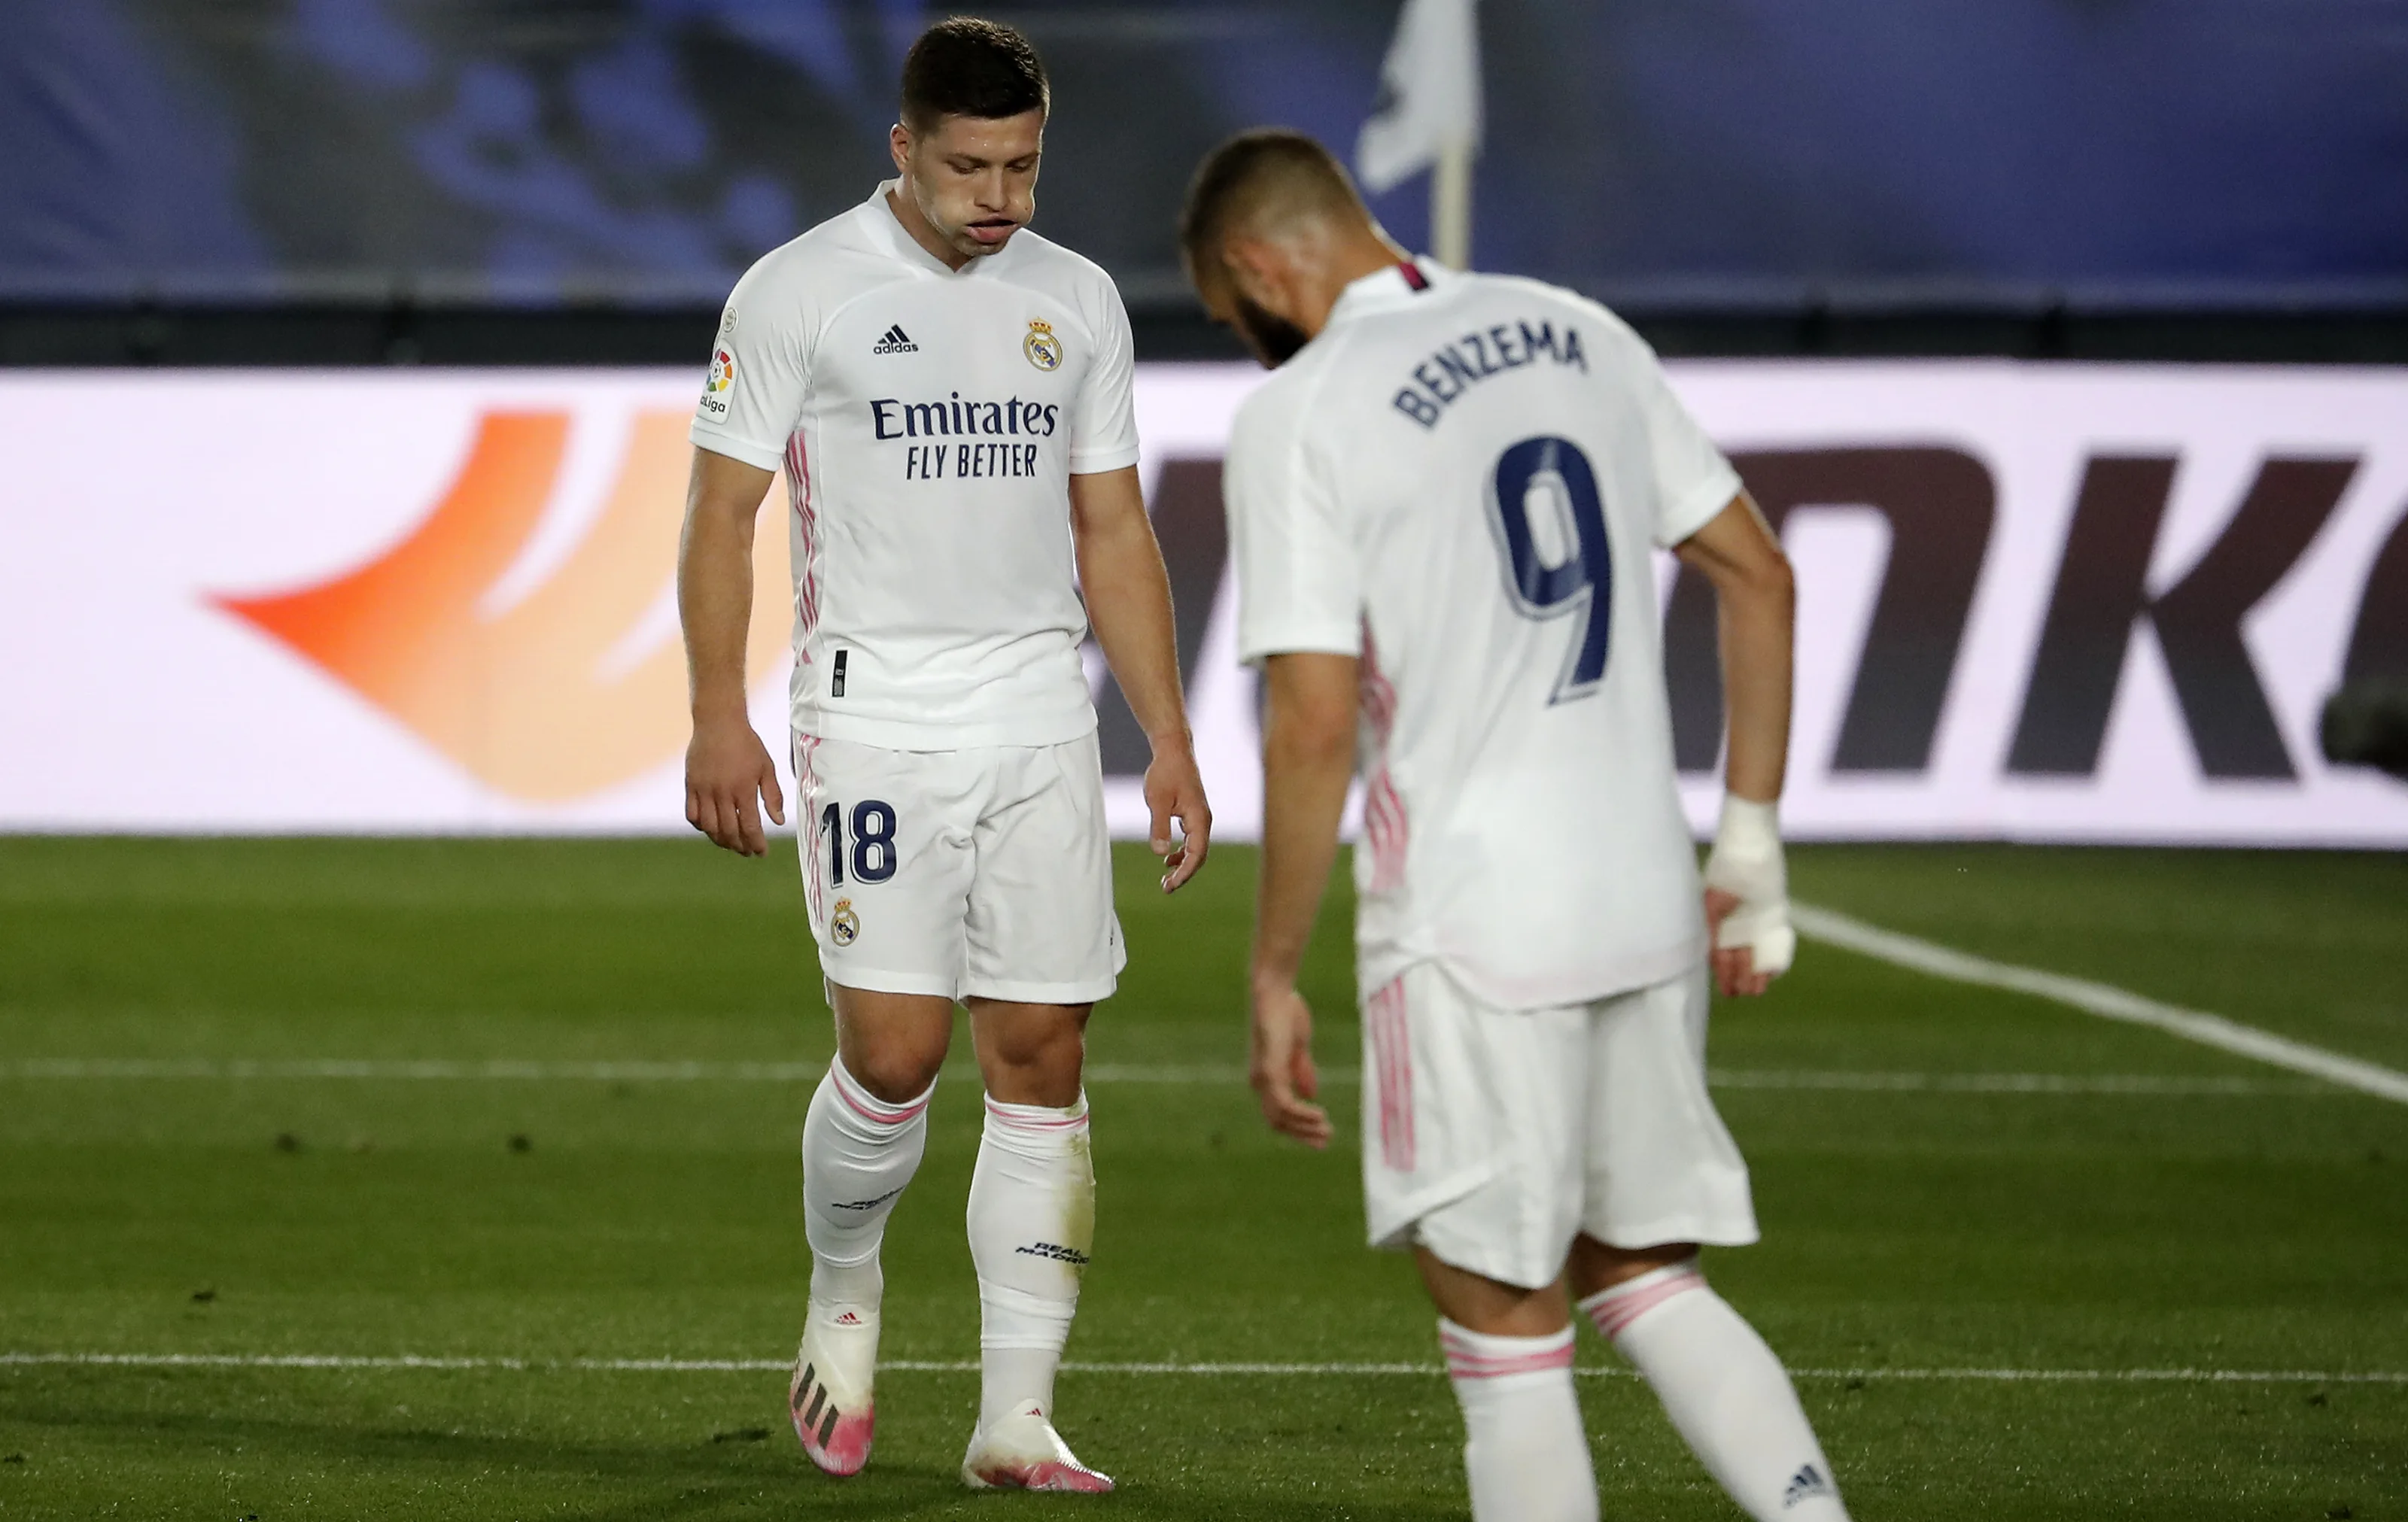 Jogadora explica saída do Real Madrid e aponta o dedo ao clube